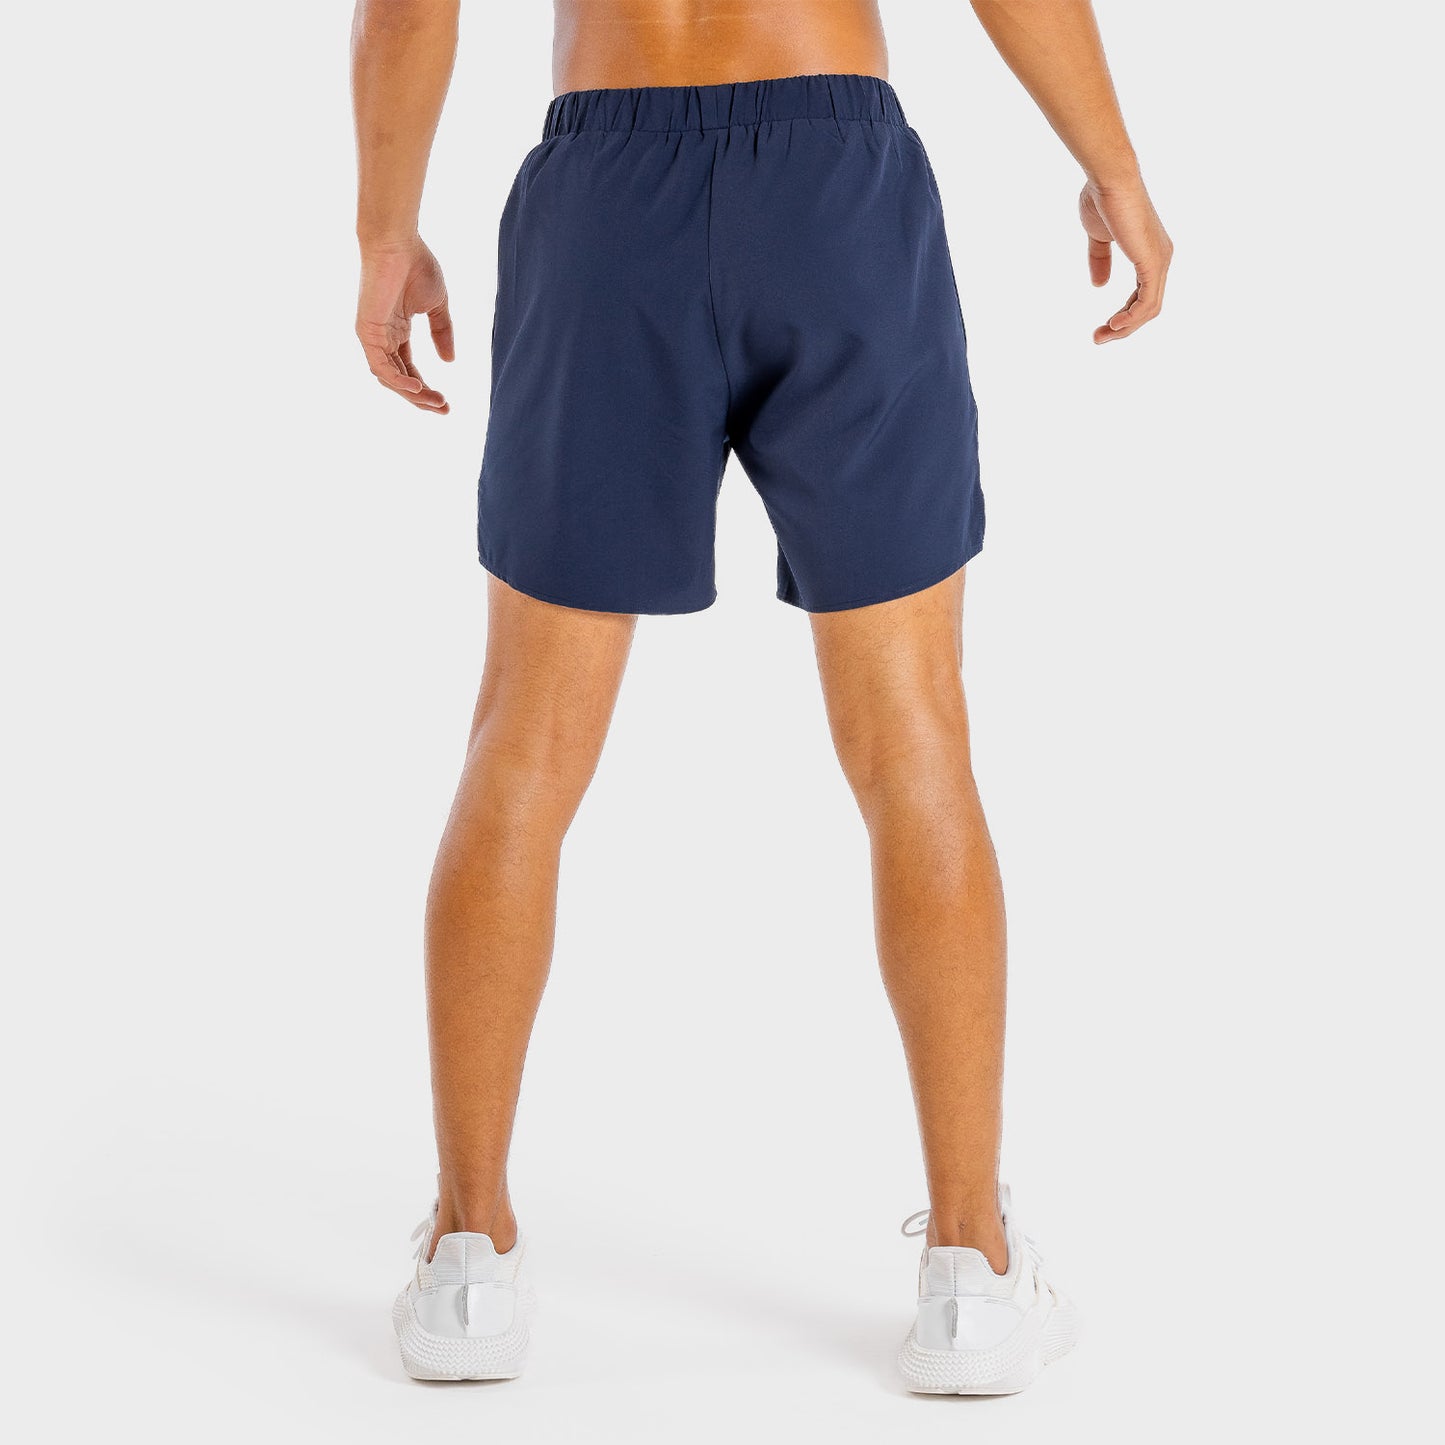 squatwolf-short-for-men-primal-shorts-workout-navy-gym-wear